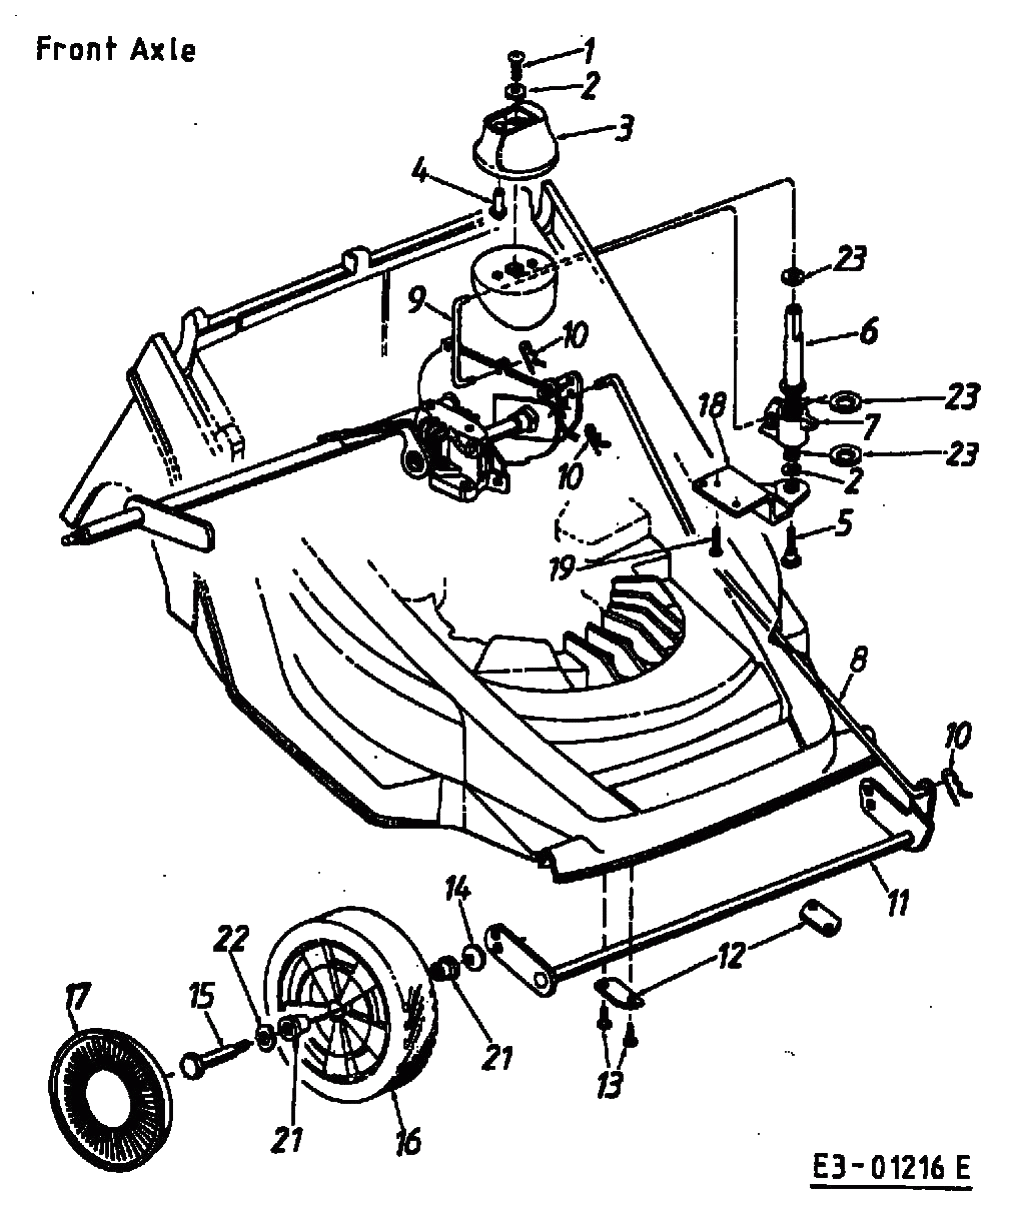 MTD Артикул 12B-658C678 (год выпуска 2002). Передние колеса, регулятор высоты реза